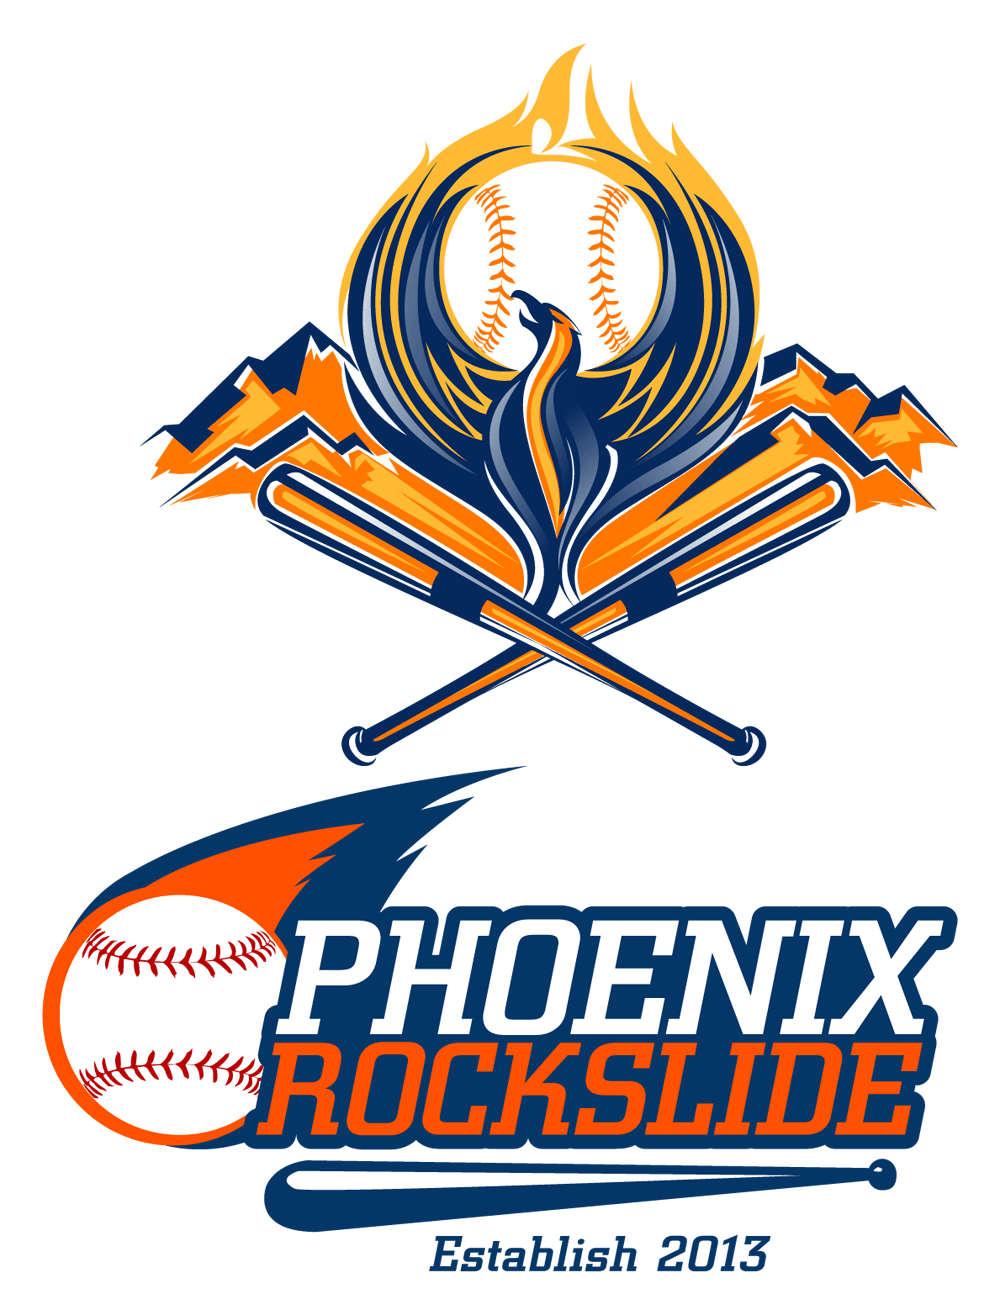 Phoenix Baseball Logo - Phoenix Rockslide. #baseball logo design. | Sports Art | Sports logo ...